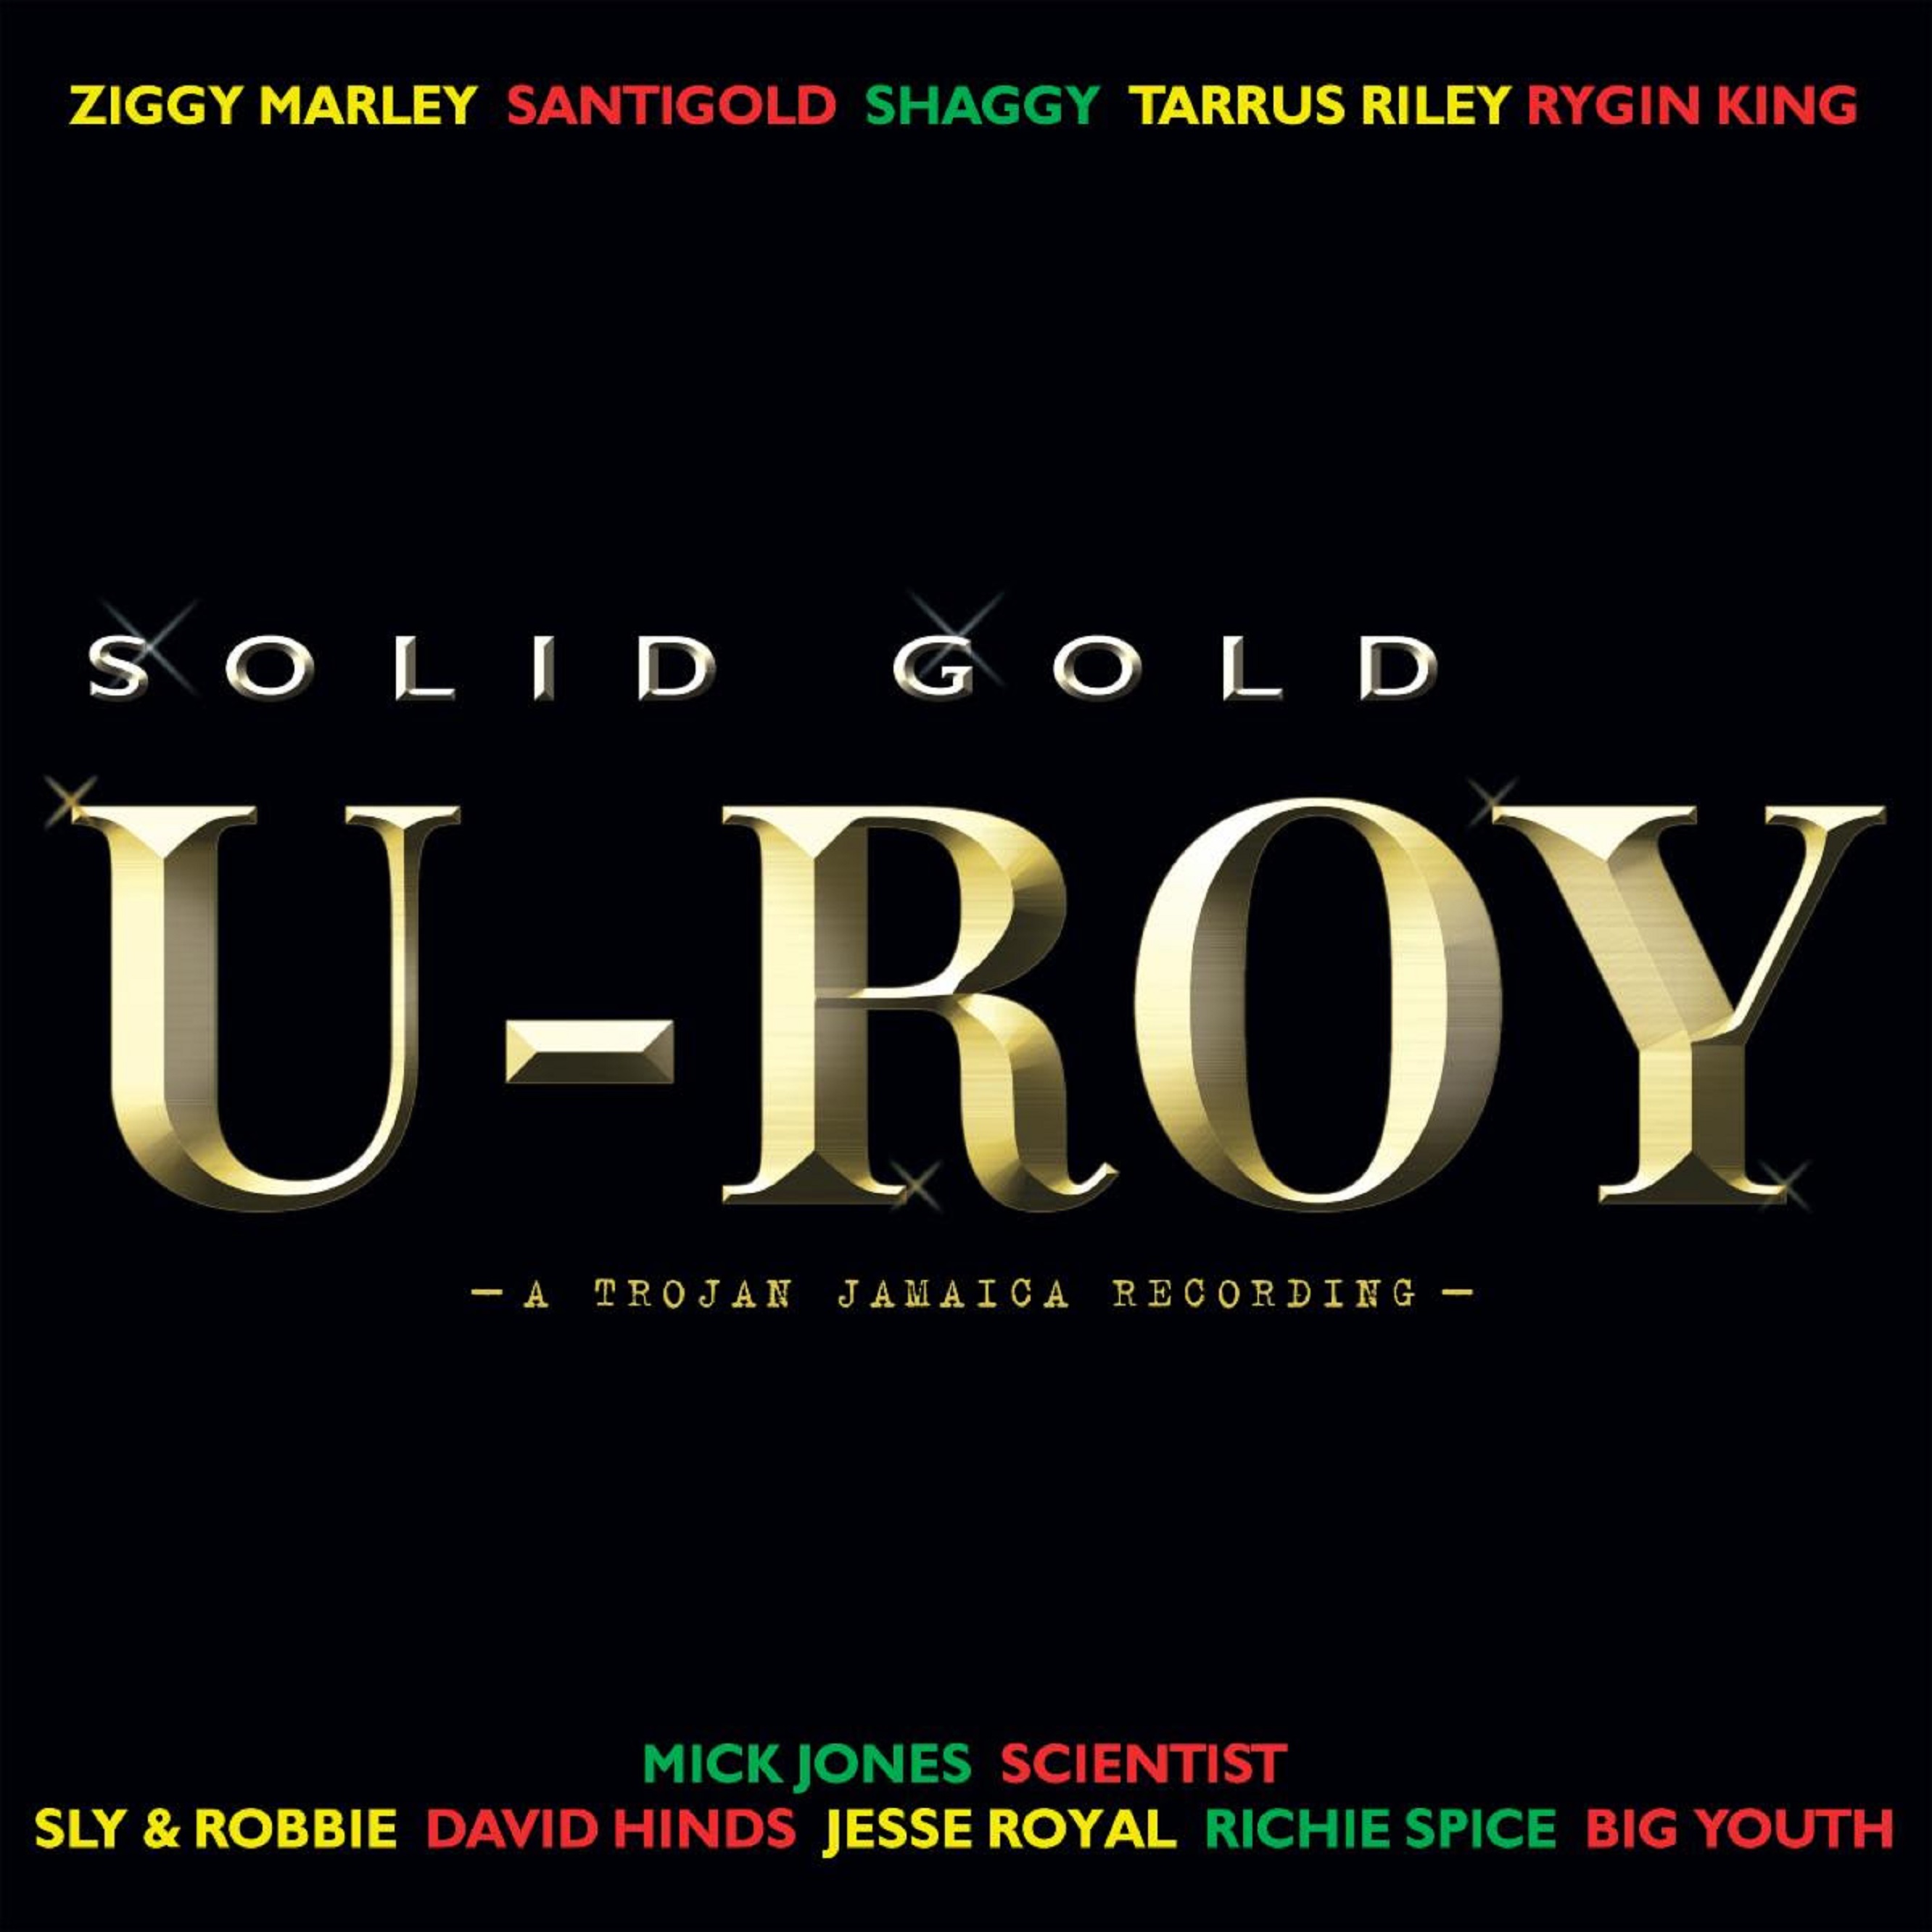 "Solid Gold U-Roy" standard 2LP black vinyl edition out now